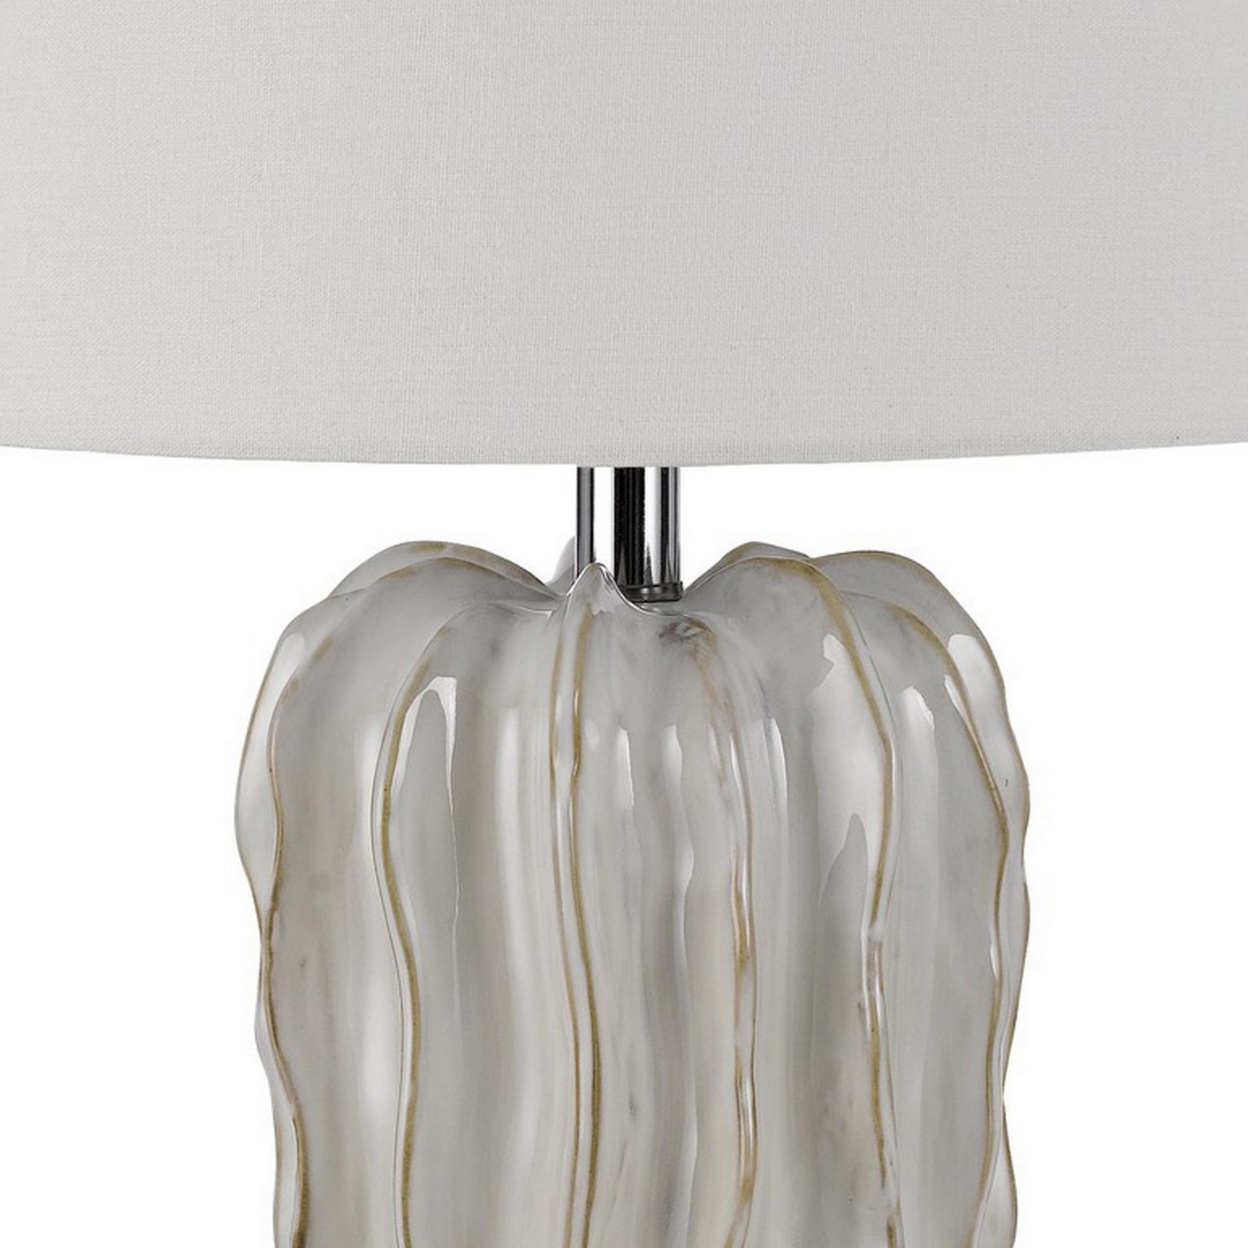 28 Inch Accent Table Lamp, Hardback Fabric Shade, Embossed Ceramic, Pearl- Saltoro Sherpi